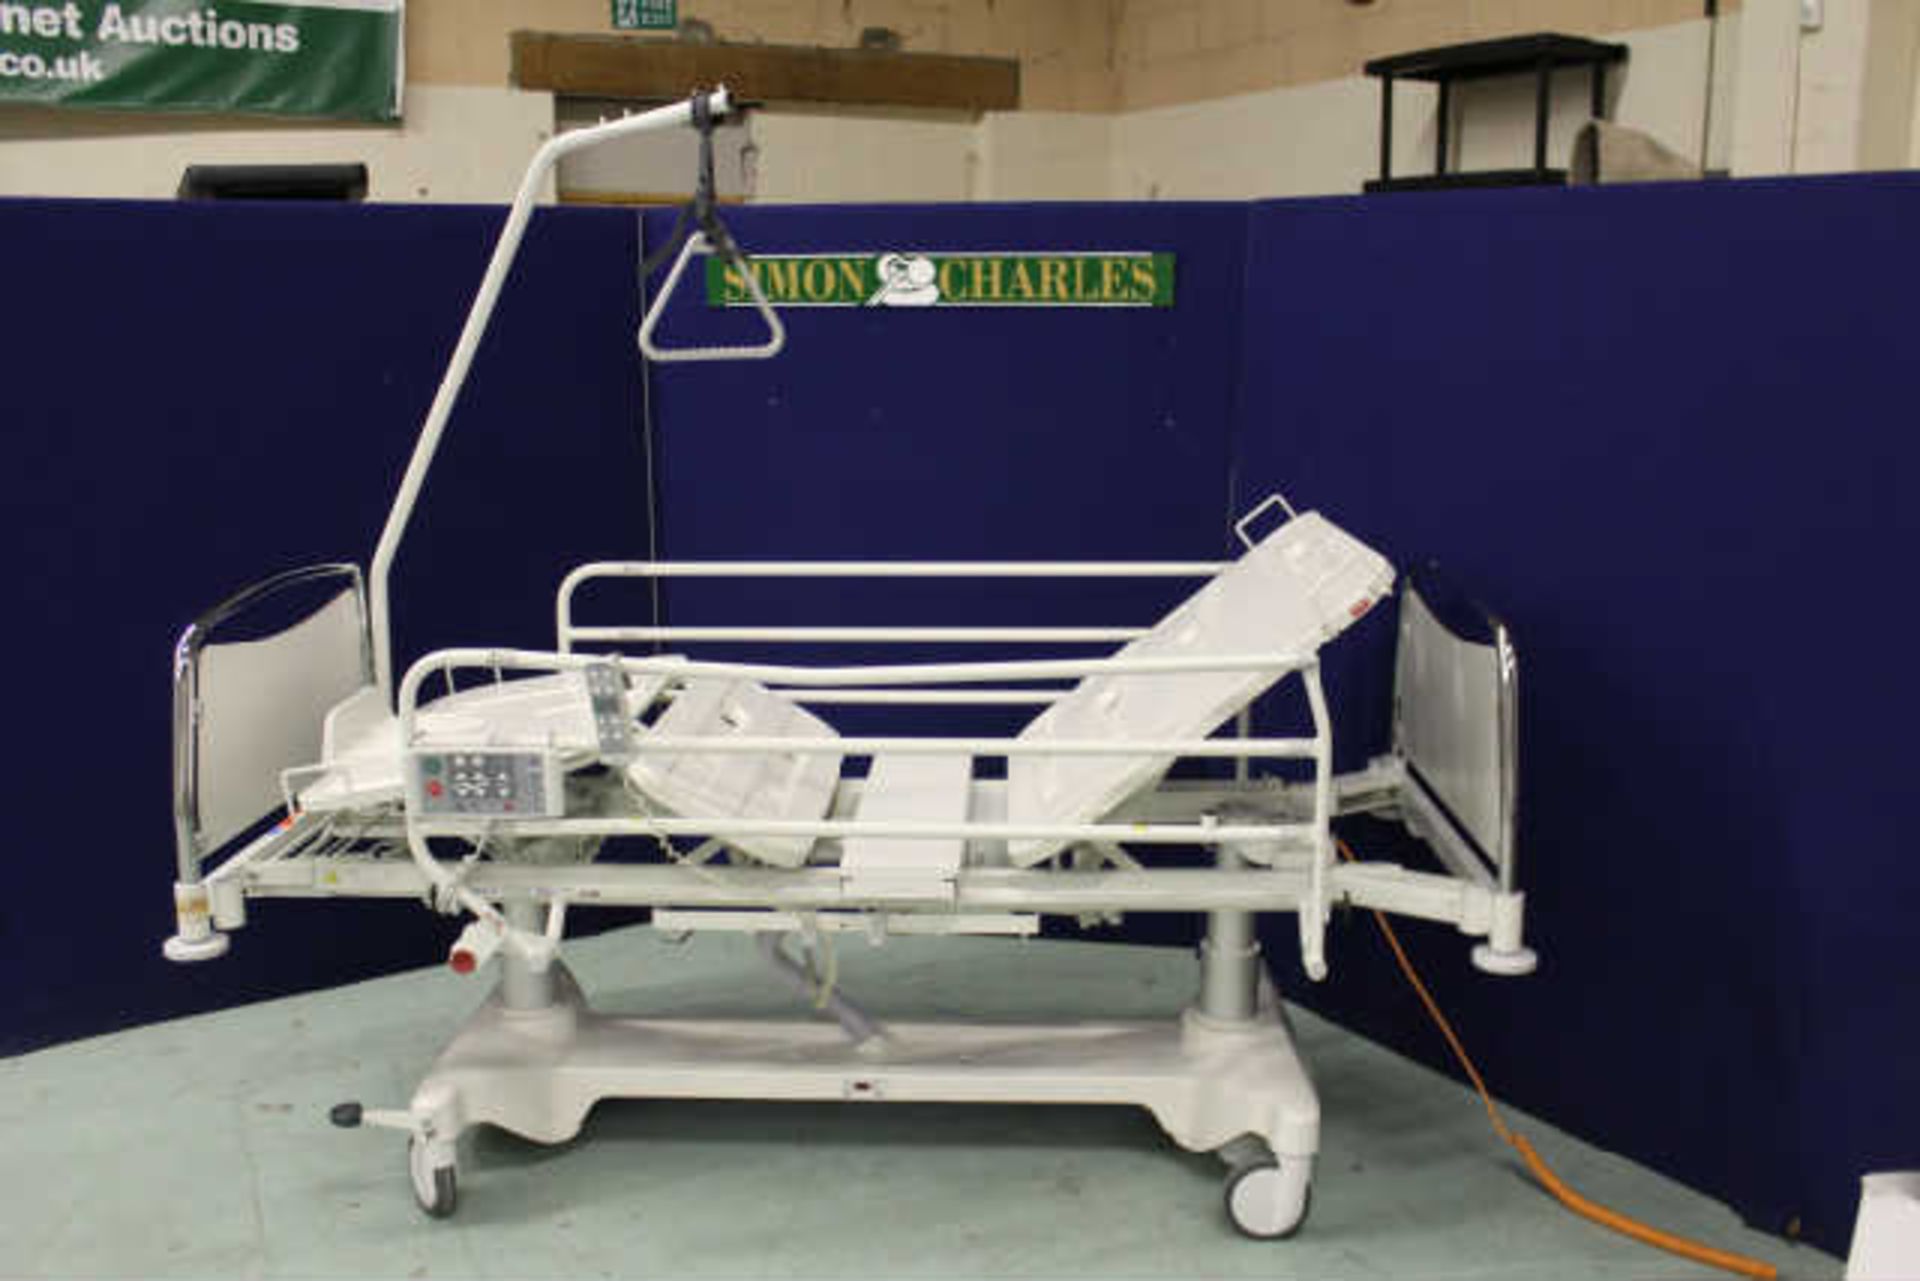 ELEGANZA STANDARD 3000 CPR ADJUSTABLE ELECTRICAL HOSPITAL BED WITH STANDARD 110V INDUSTRIAL PLUG AND